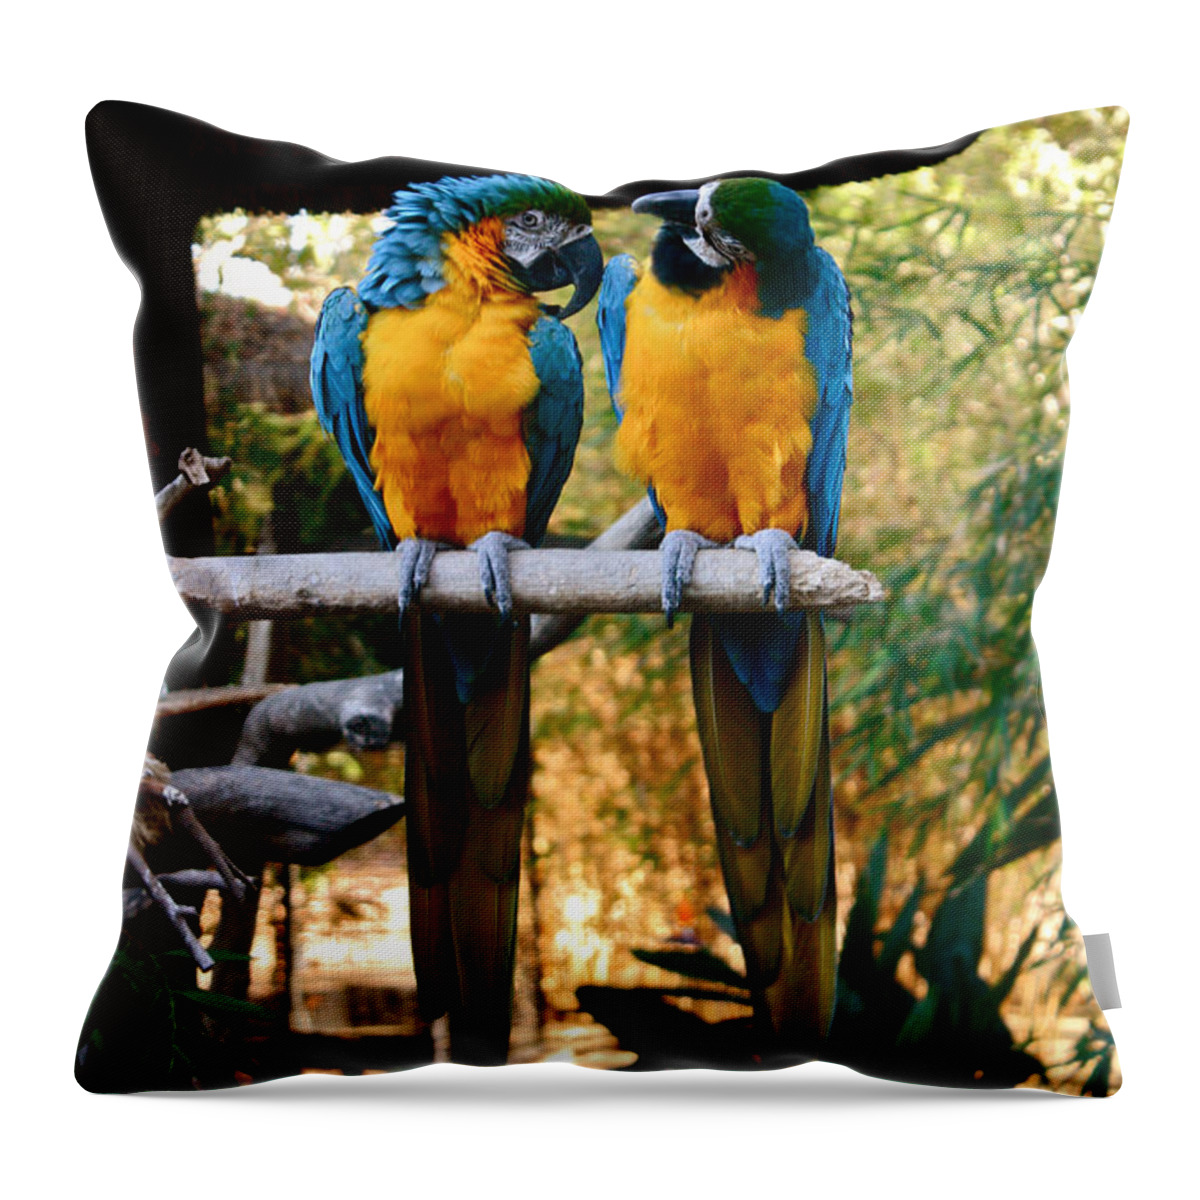 Santa Ana Zoo Throw Pillow featuring the photograph Love Birds by Carol Tsiatsios